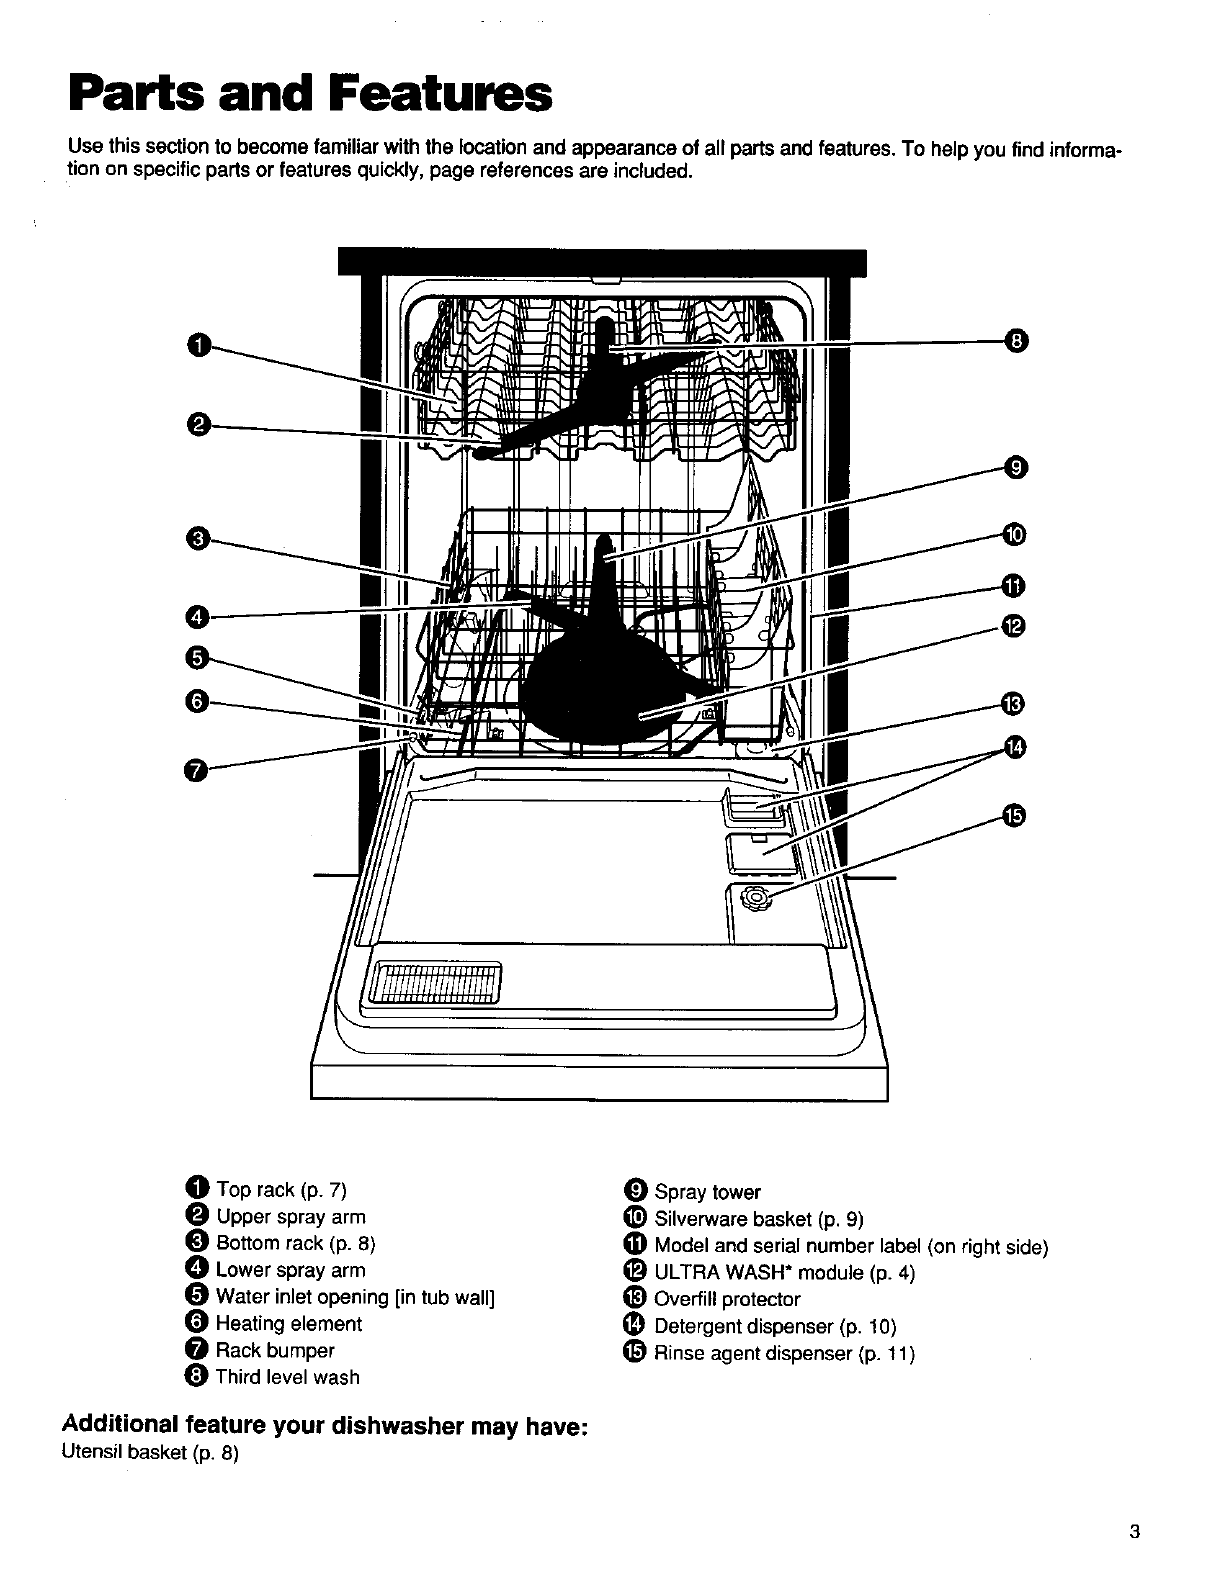 Kenmore Dishwasher Model 665 Parts Manual